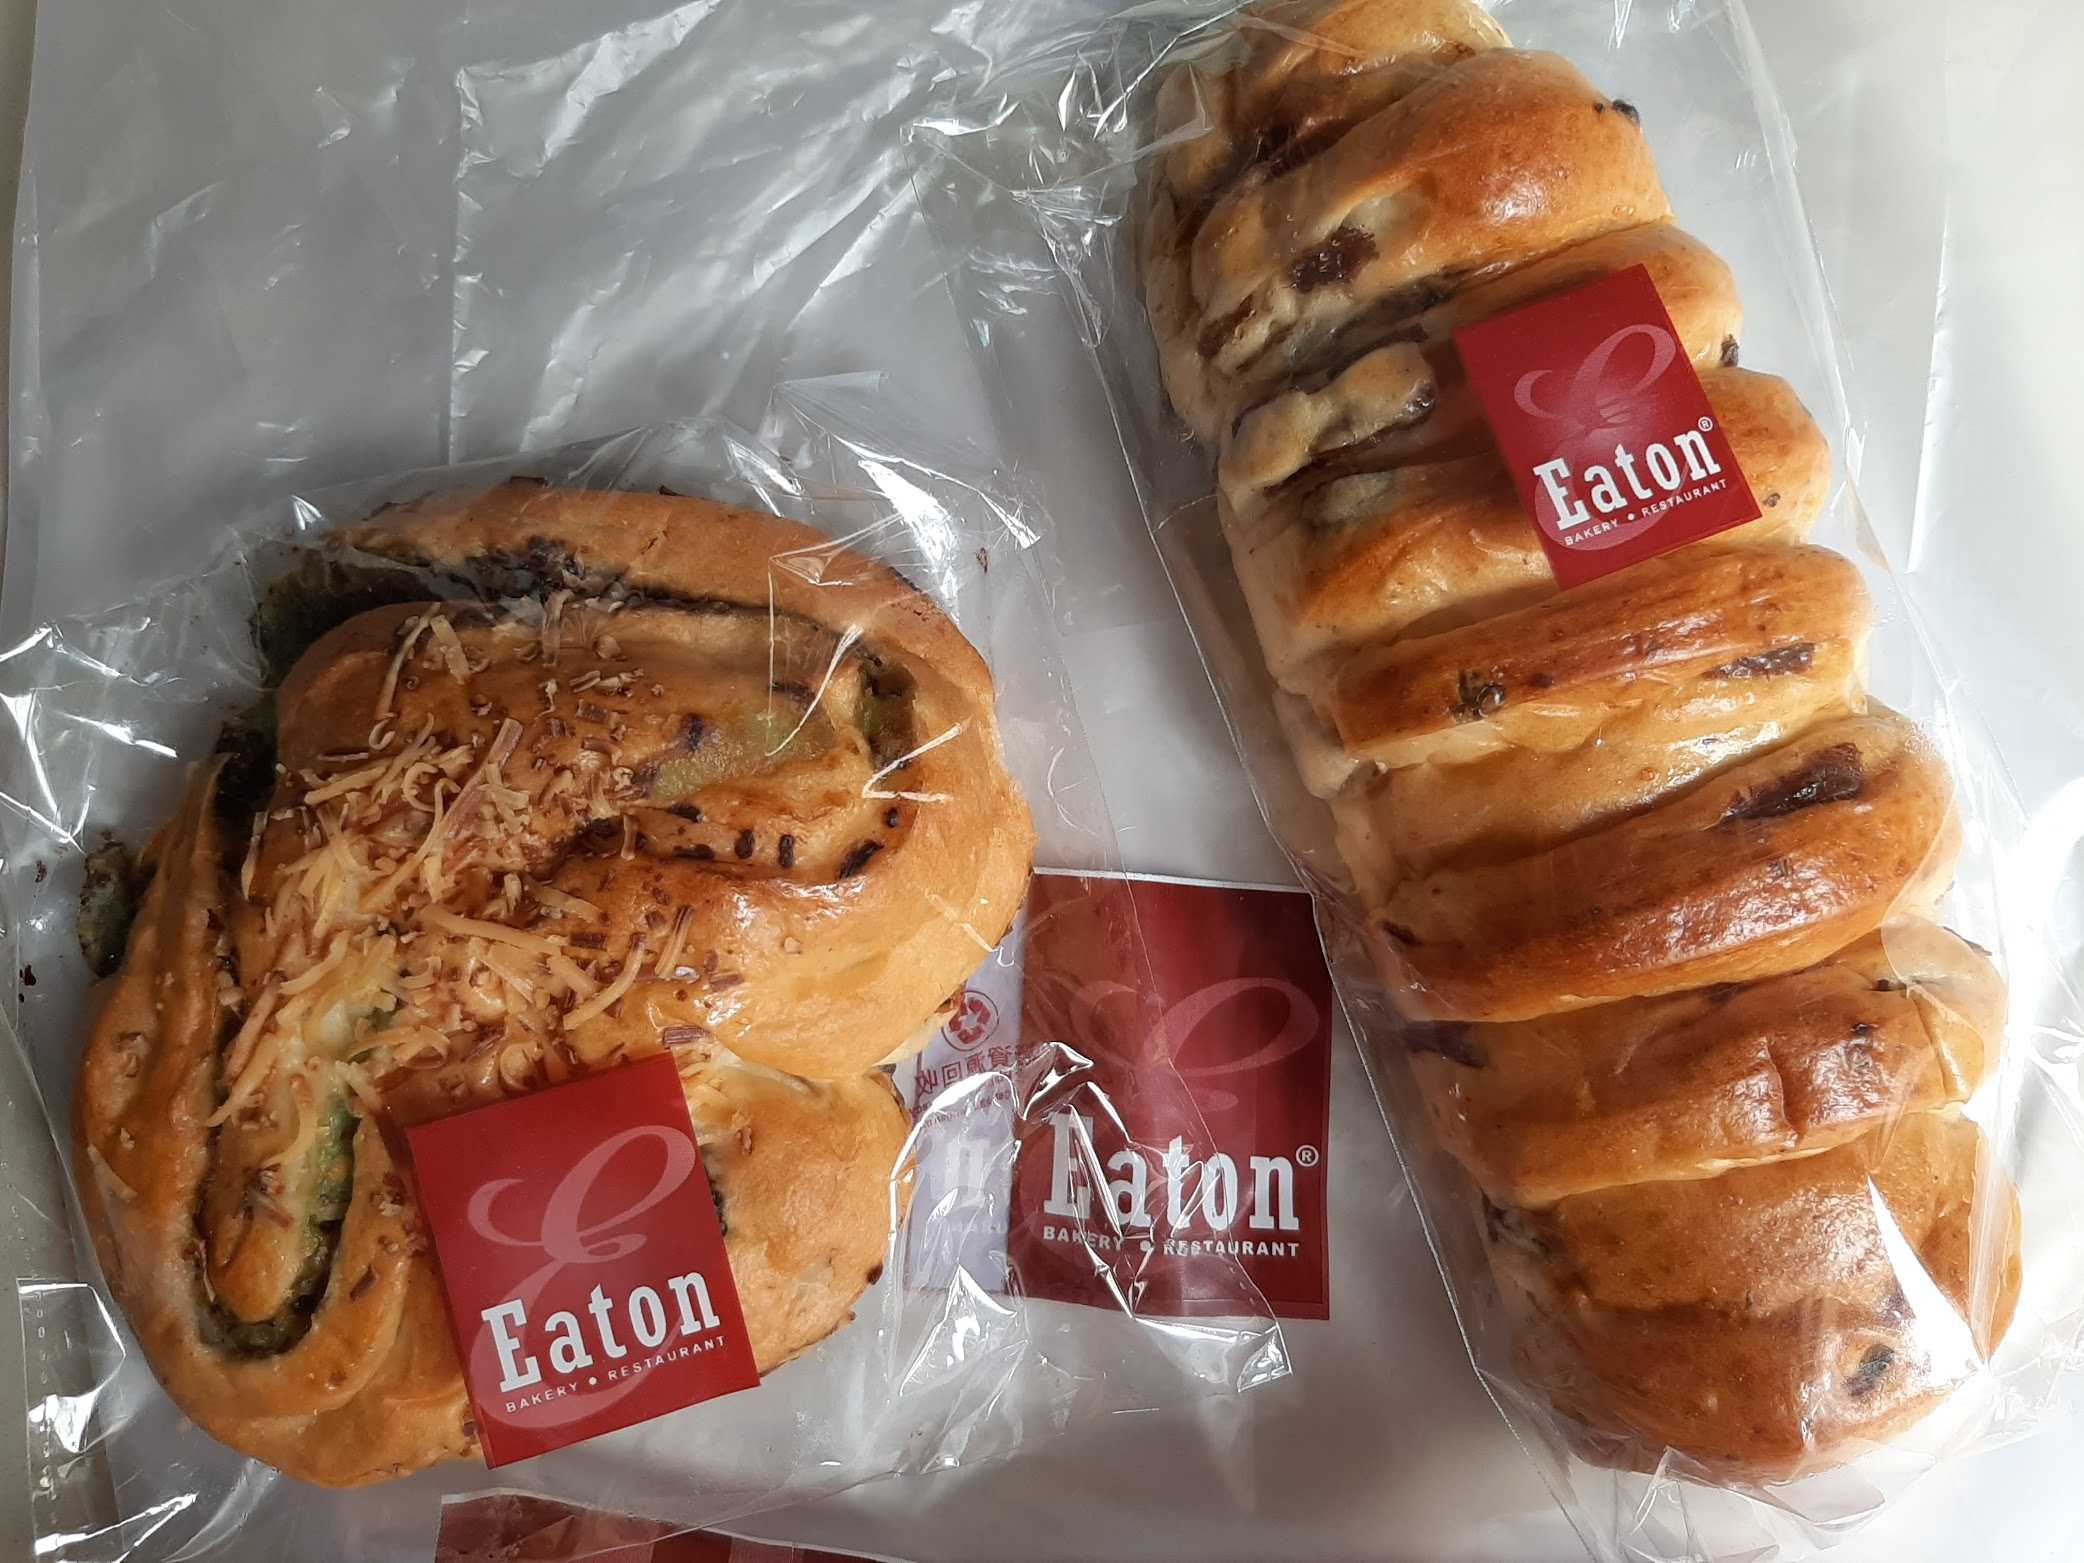 Eaton Restaurant & Bakery - Kebon Jeruk 1